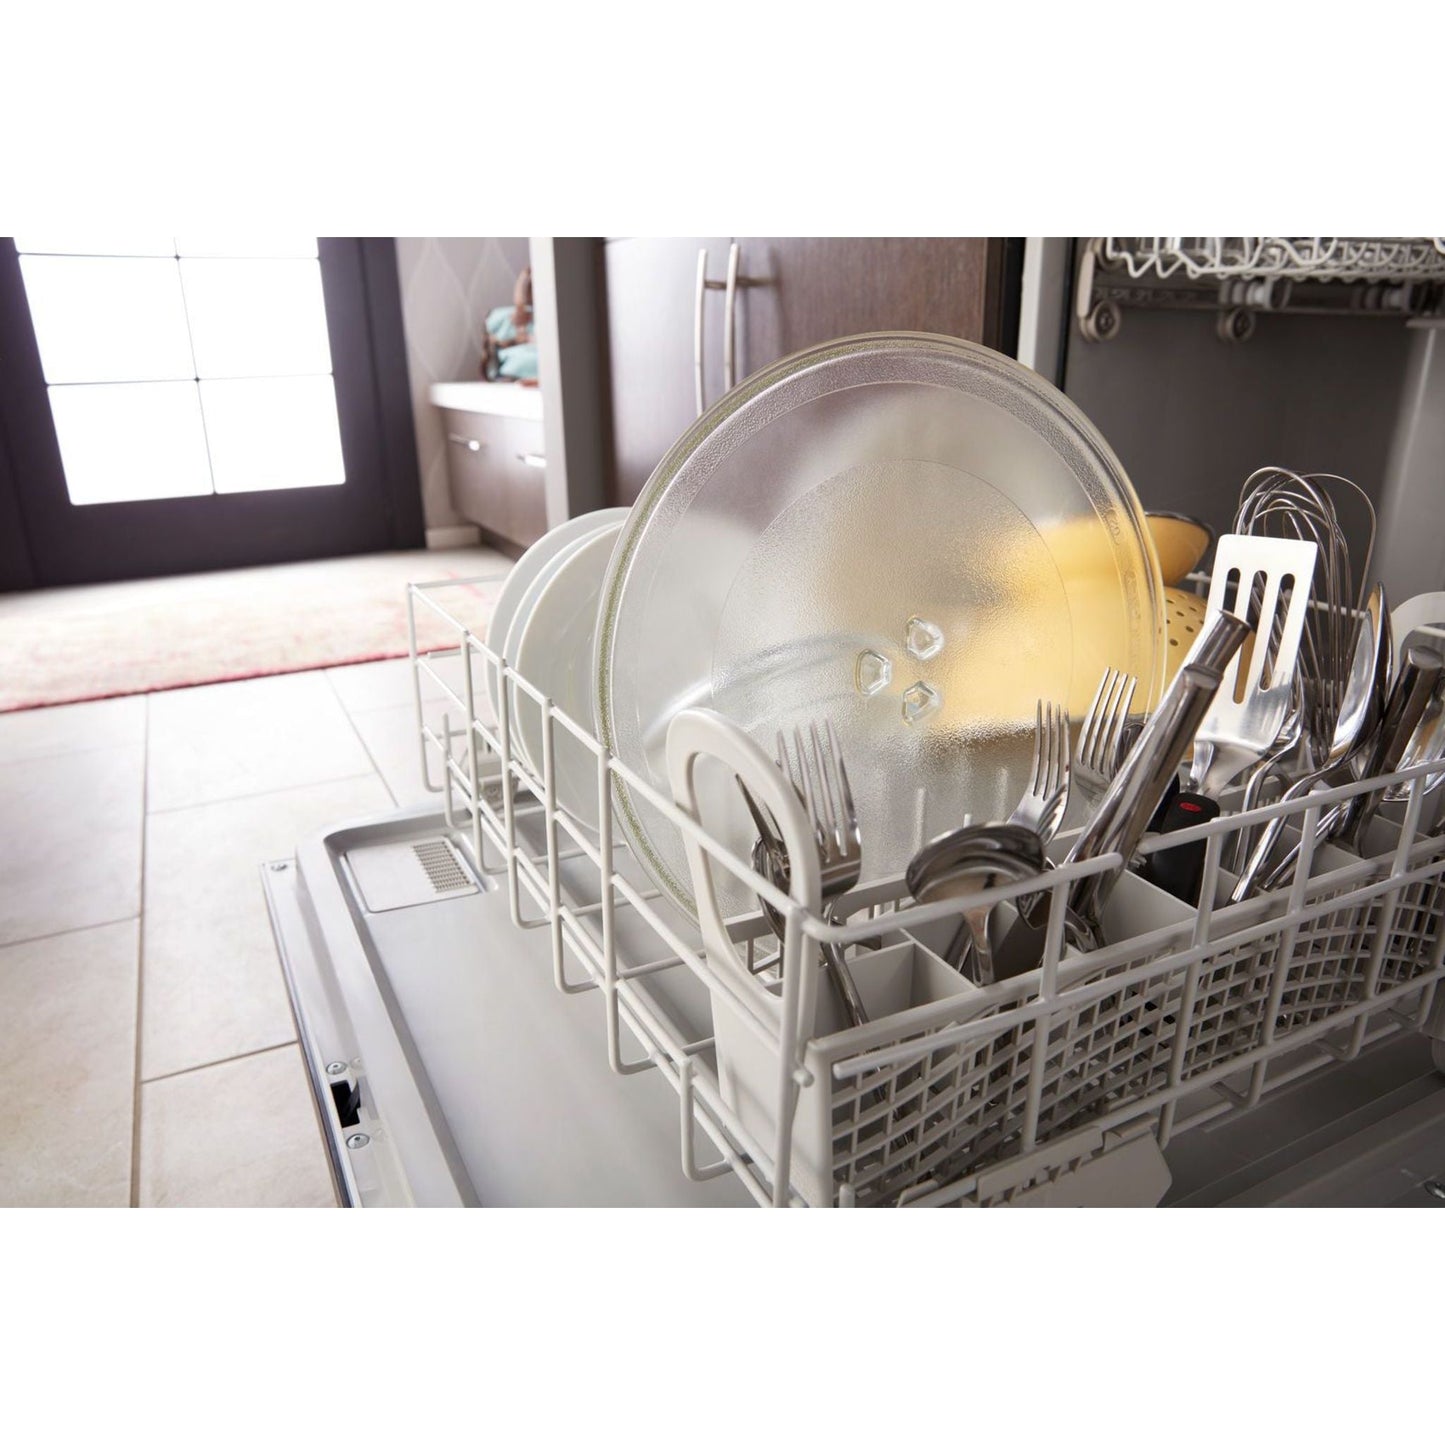 Whirlpool Dishwasher Plastic Tub (WDF330PAHS) - Stainless Steel